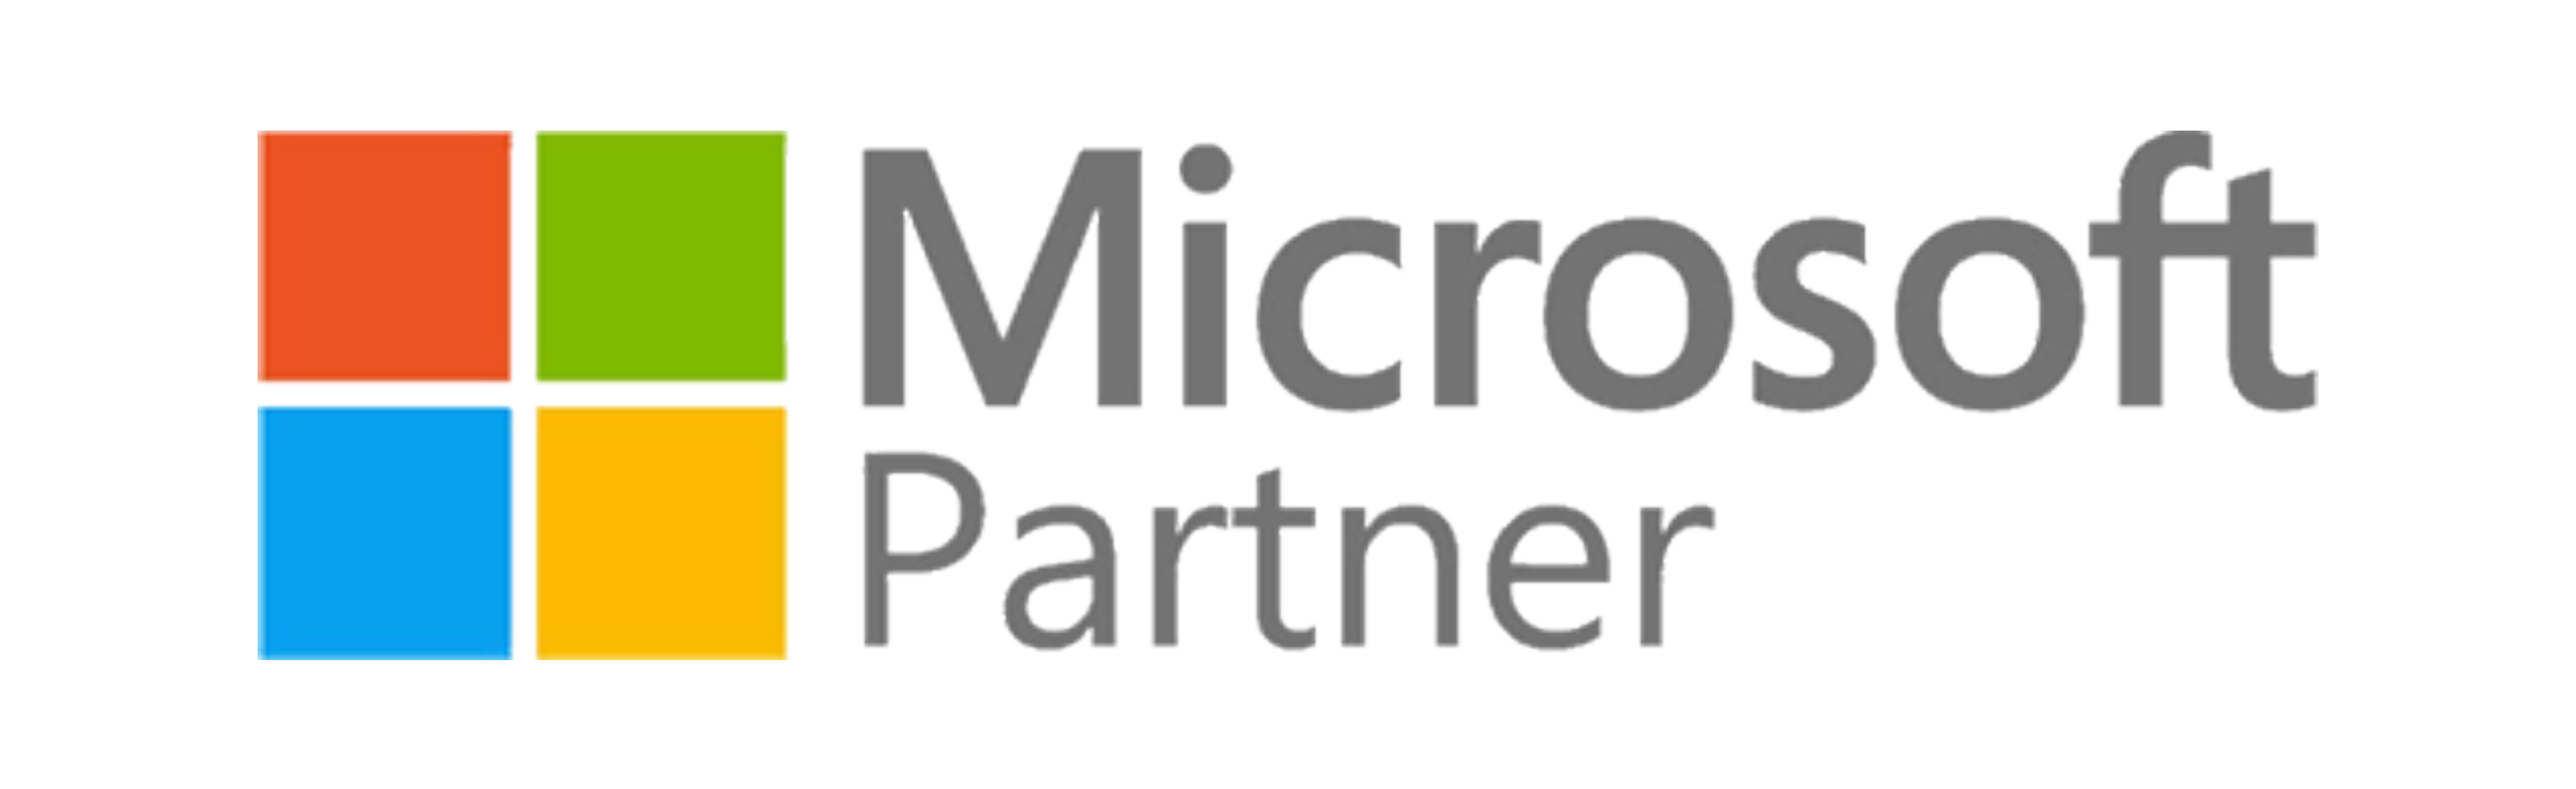 Microsoft Partner Logo White BG